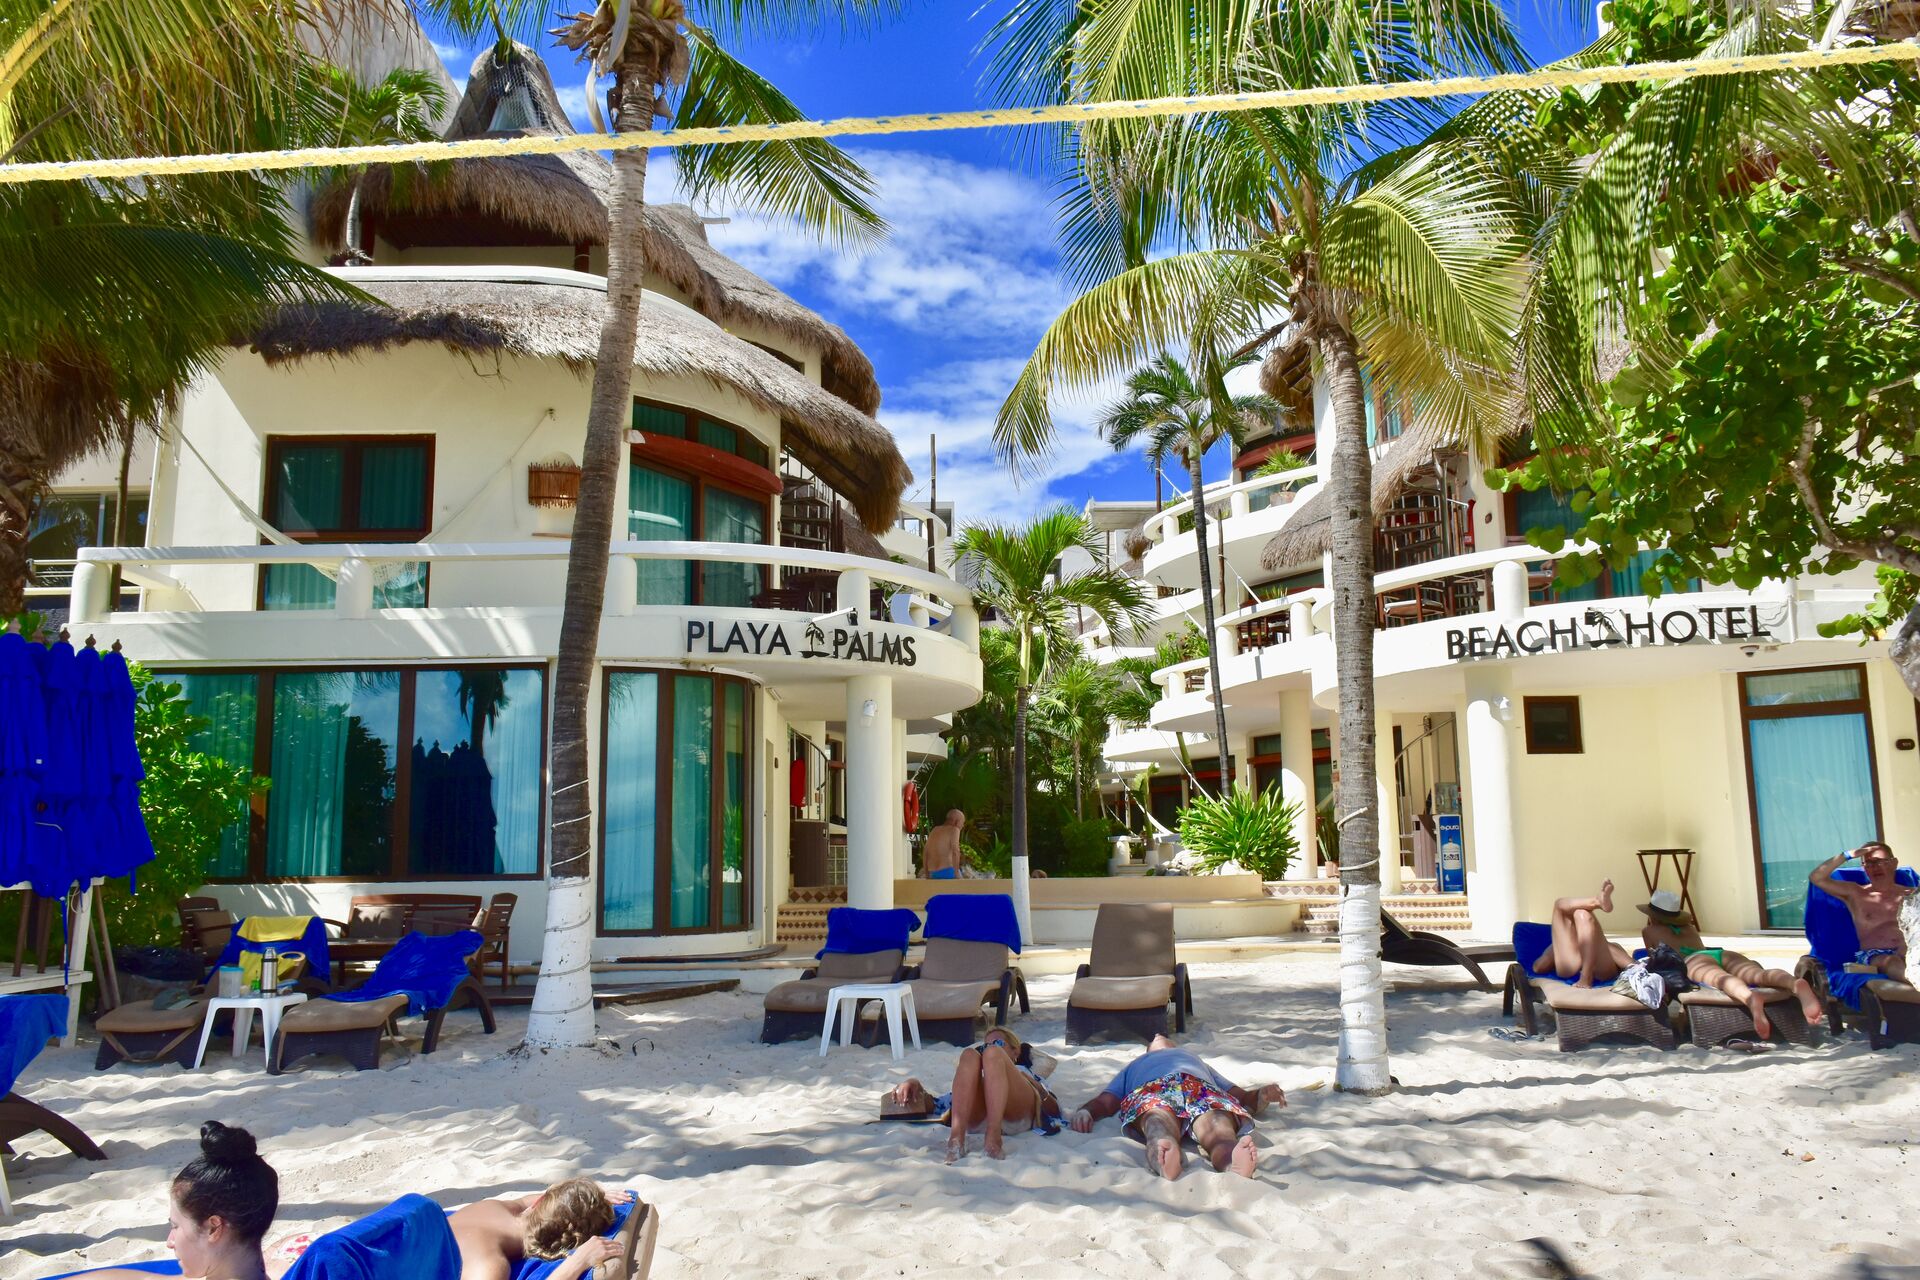 Playa Palms Beach Hotel.